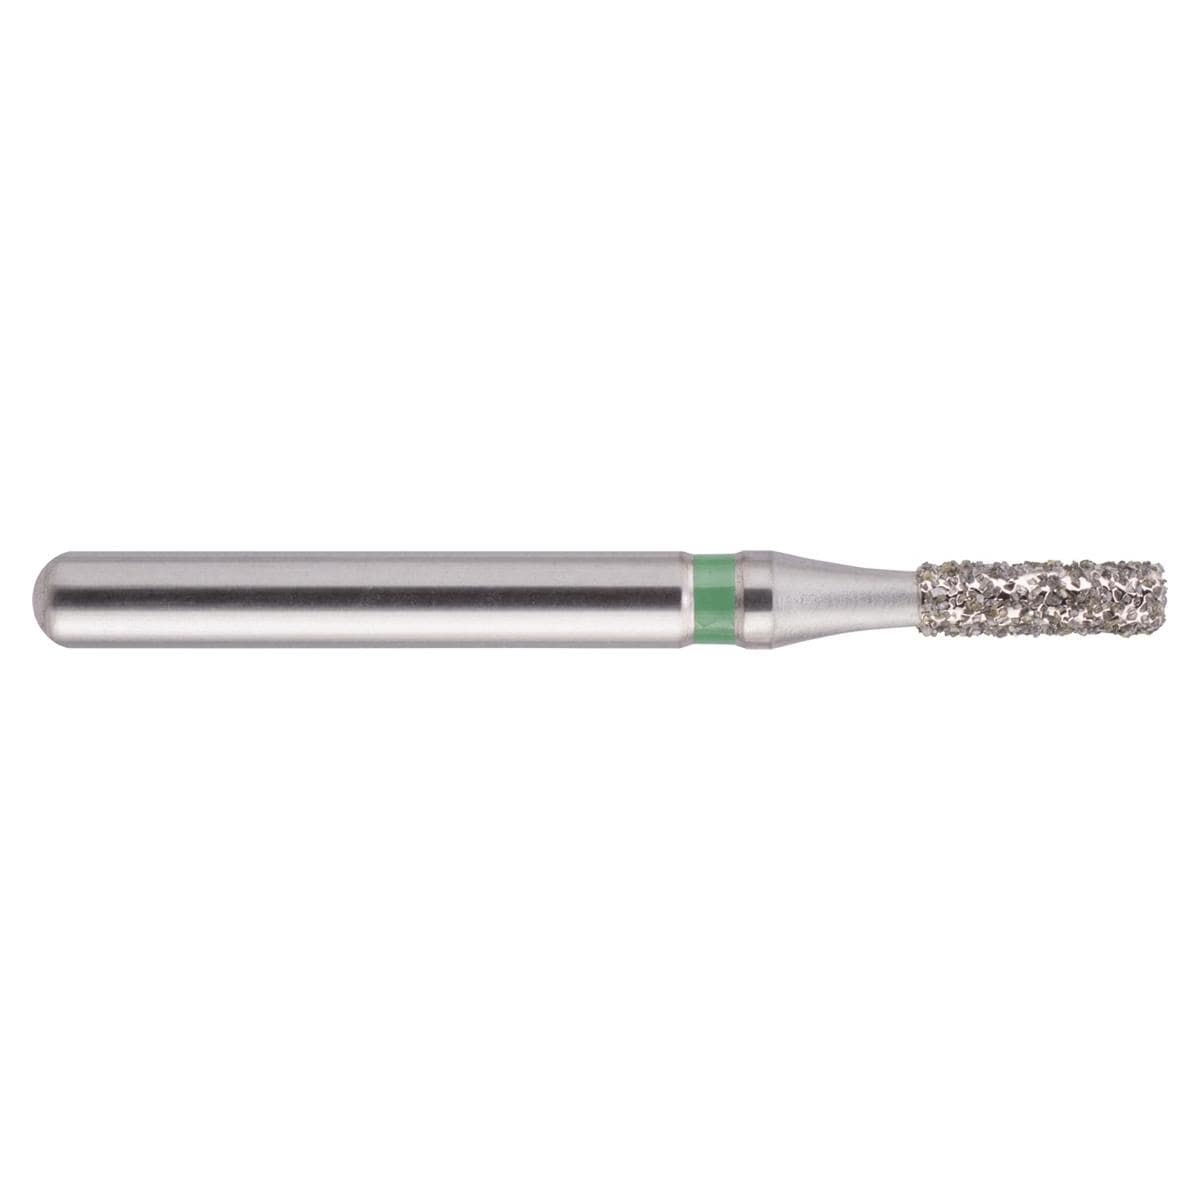 NeoDiamond FG, Form 109, Zylinder flach - ISO 012, grob (grün), Packung 10 Stück